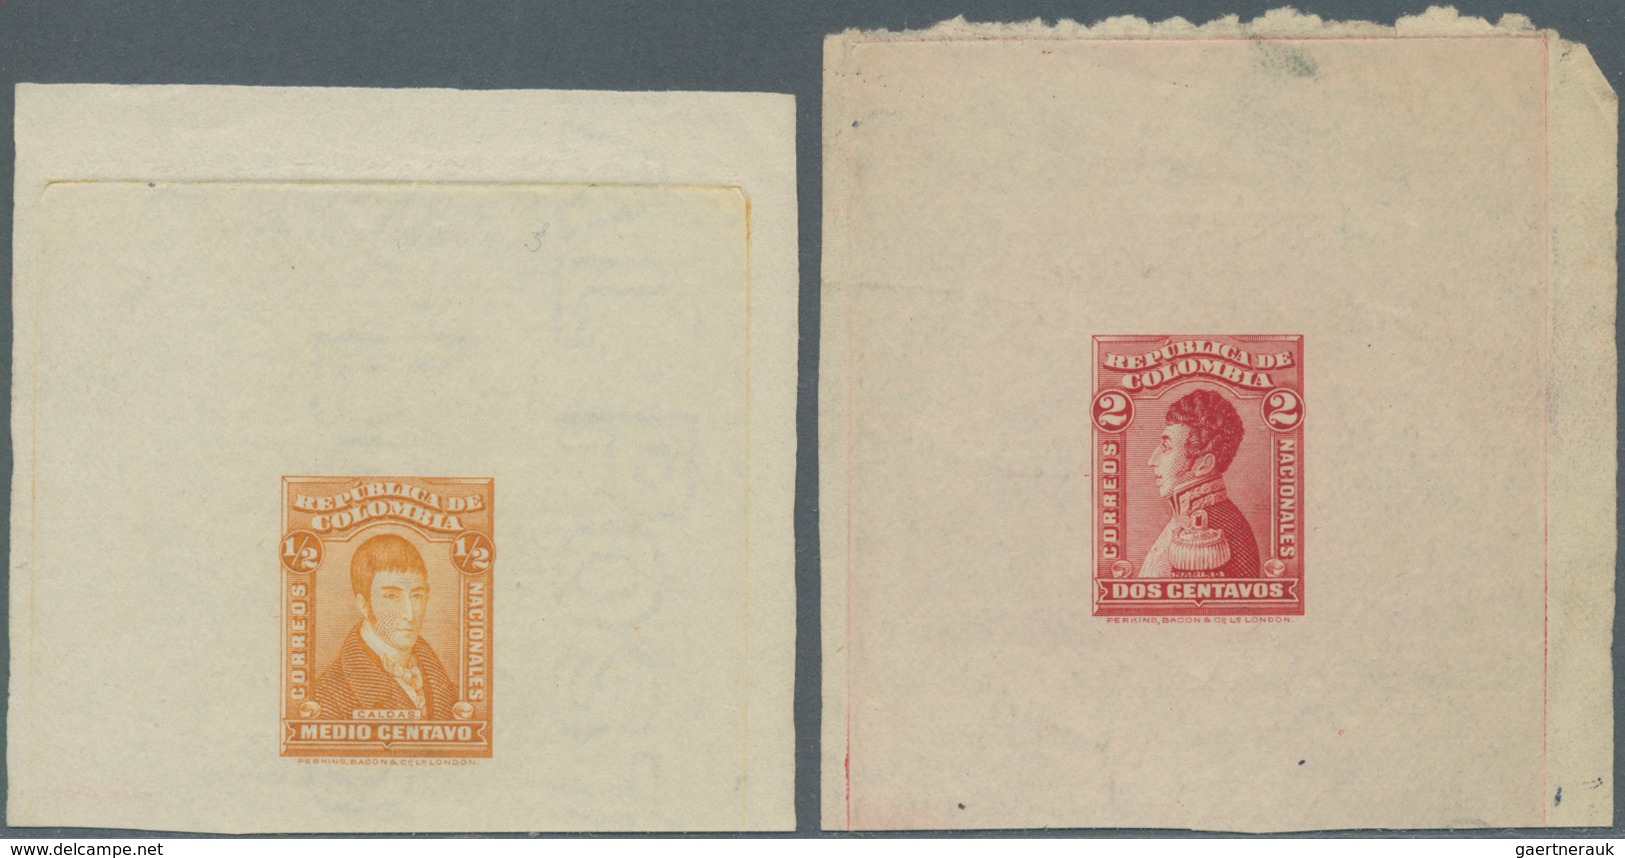 Kolumbien: 1917, Caldas 1/2 C. And Nerino 2 C. Single Die Proofs By Perkins & Bacon, The 1/2 C. On W - Colombie